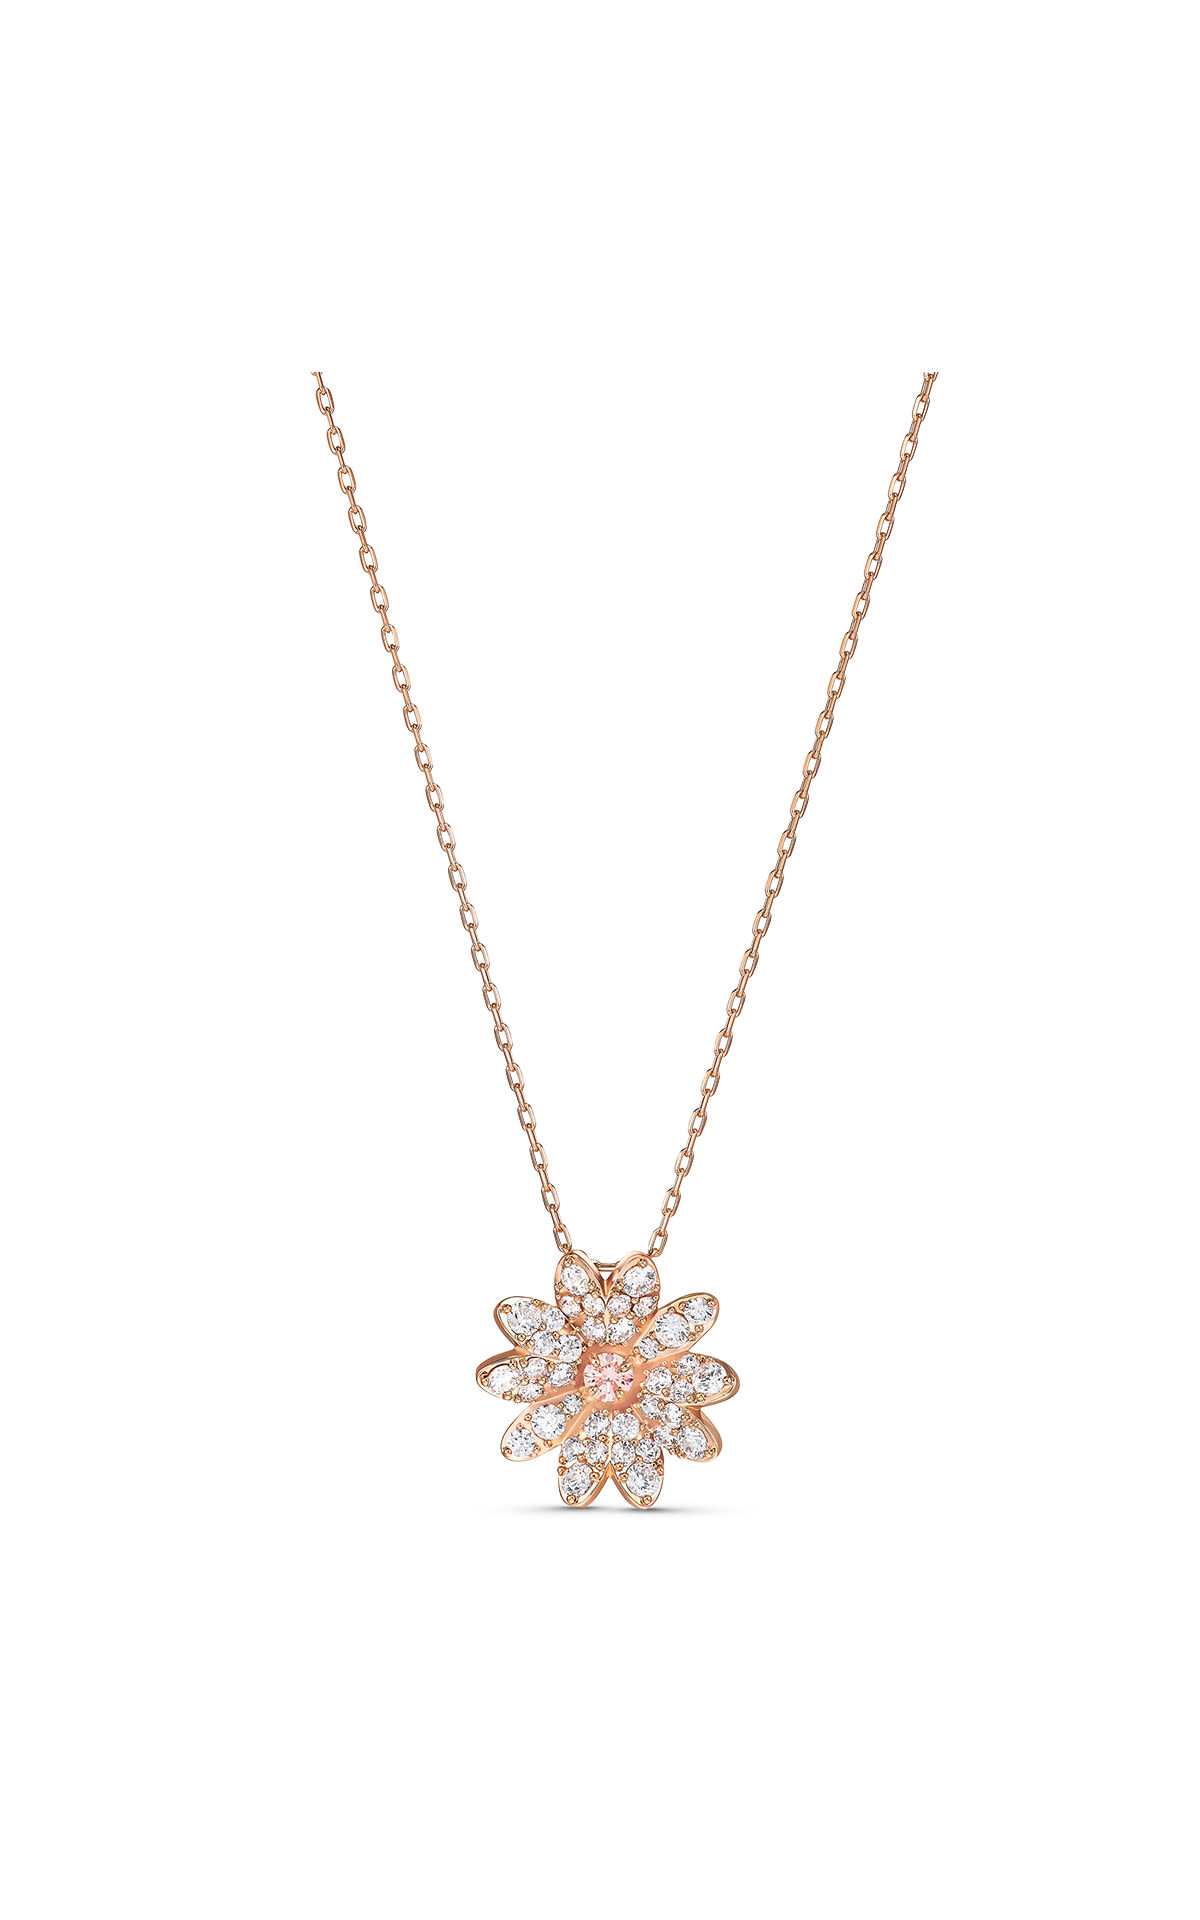 Flower-shaped pendant in rose gold and diamonds swarovksi